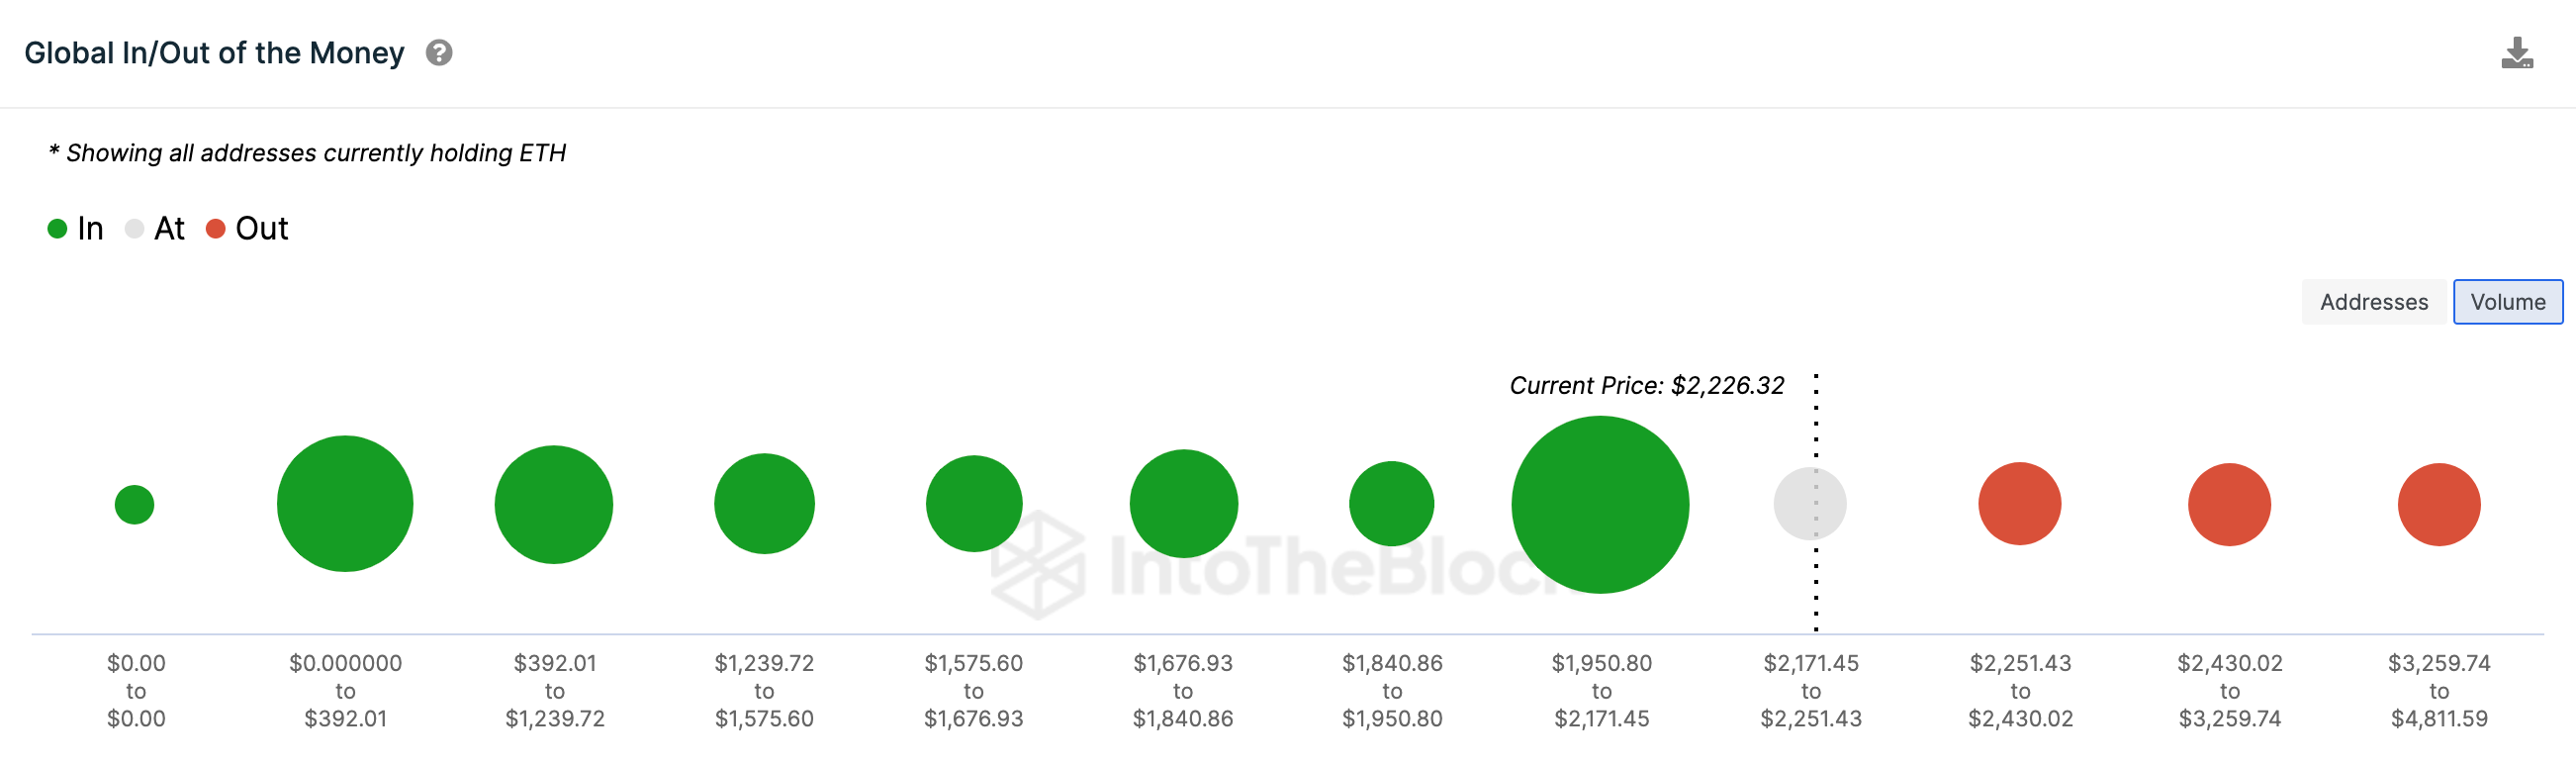 Ethereum (ETH) Price Forecast | GIOM data | Source: IntoTheBlock